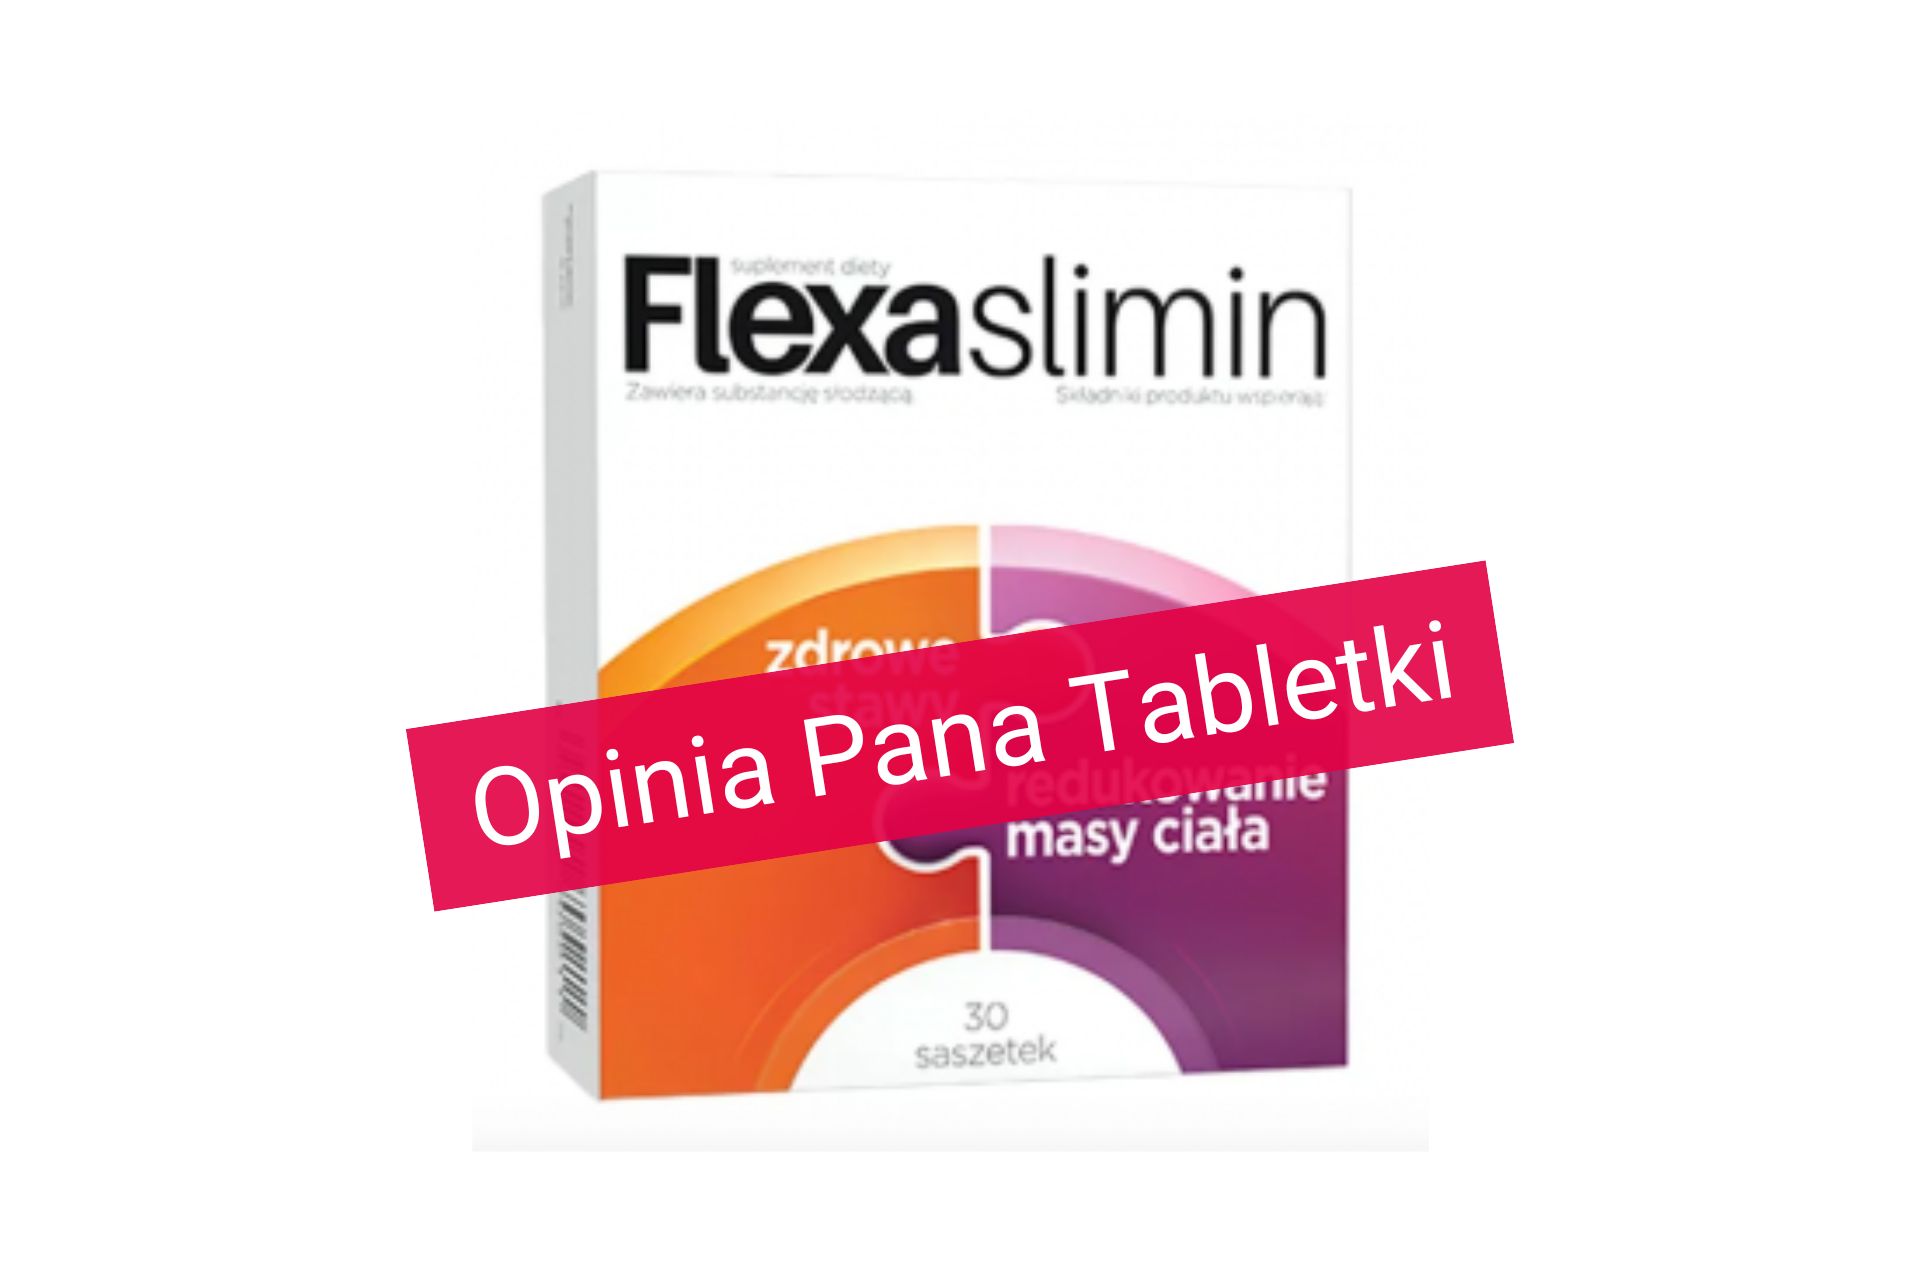 flexaslimin - analiza i opinia pan tabletka